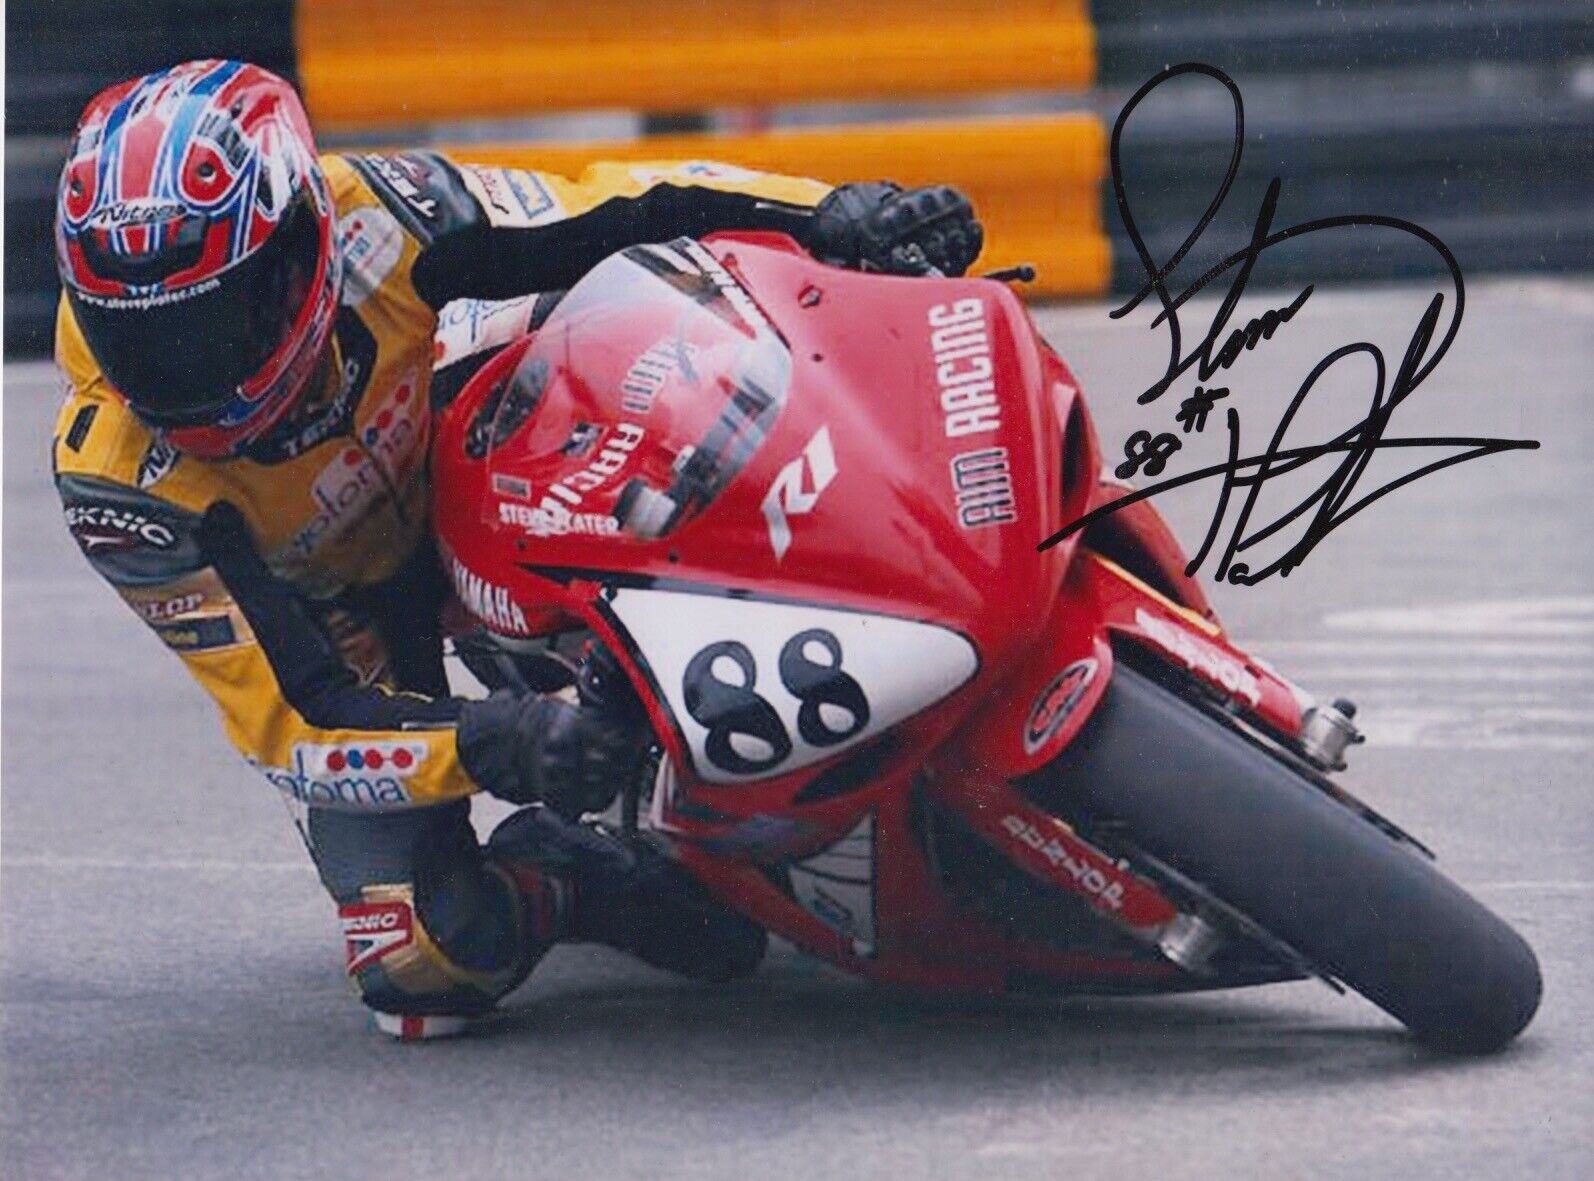 Steve Plater Hand Signed 8x6 Photo Poster painting Superbikes Autograph MotoGP, BSB, WSBK